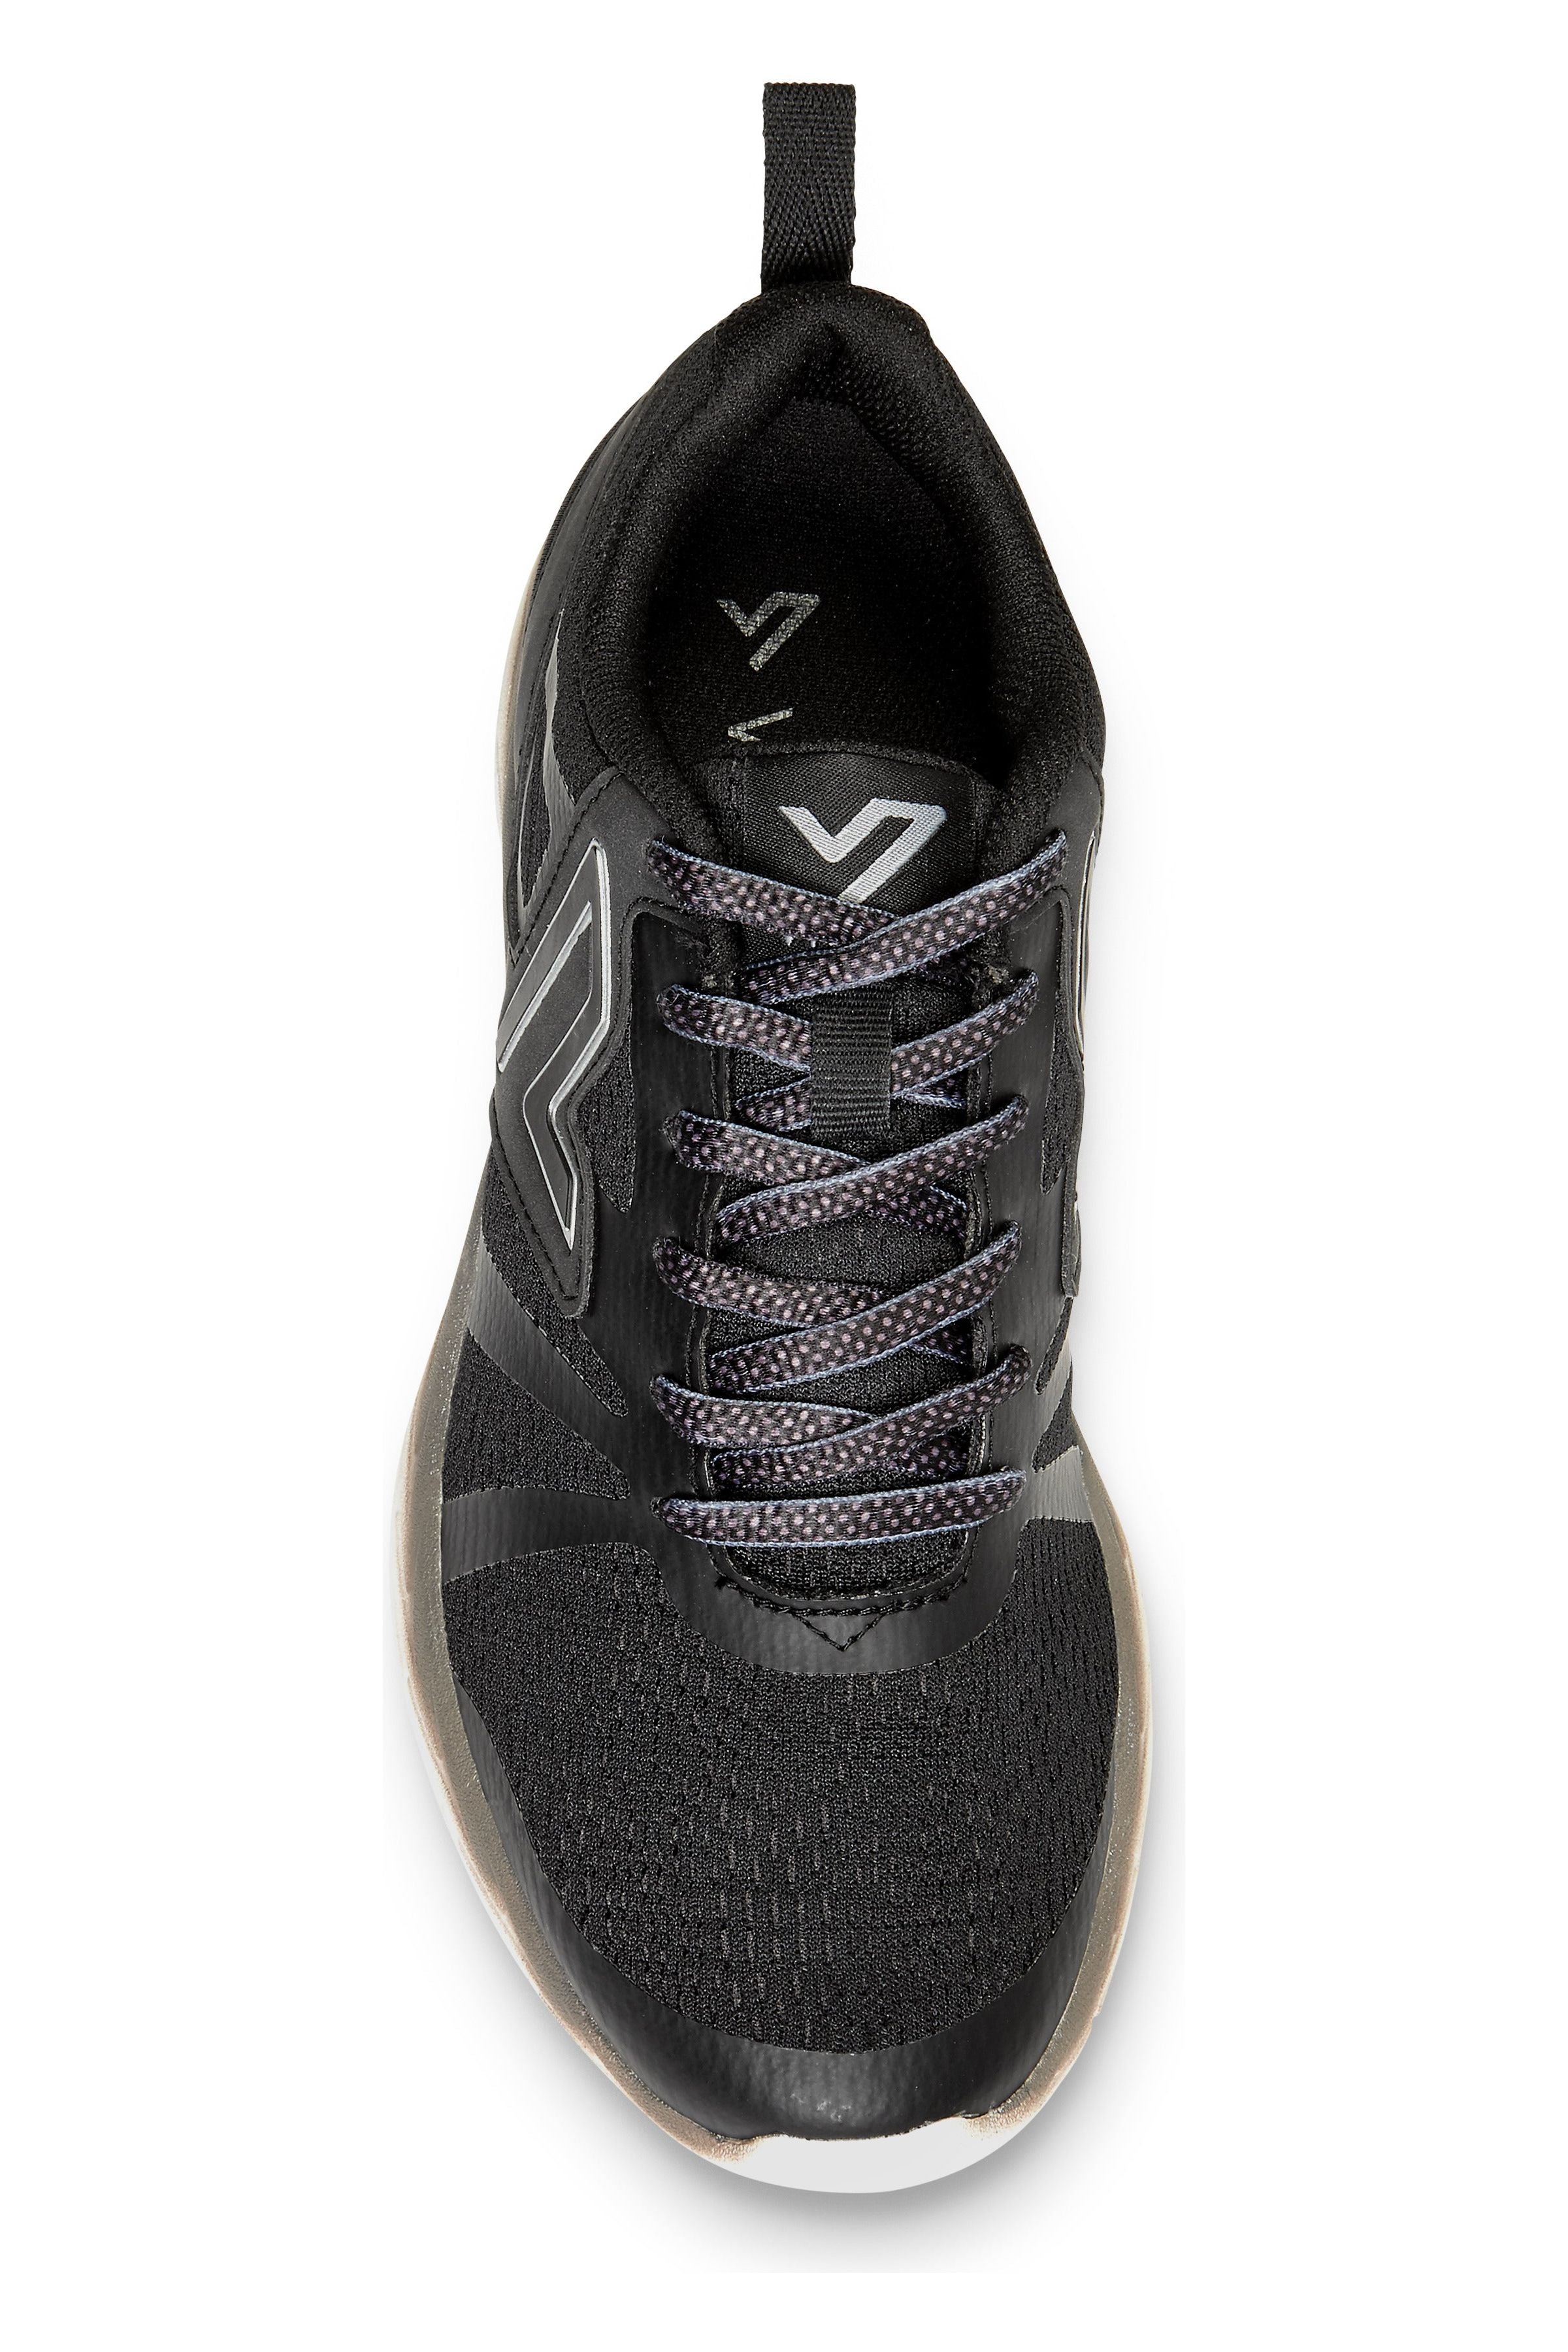 Vionic Brisk Miles Lace-Up Active Sneakers, top, black